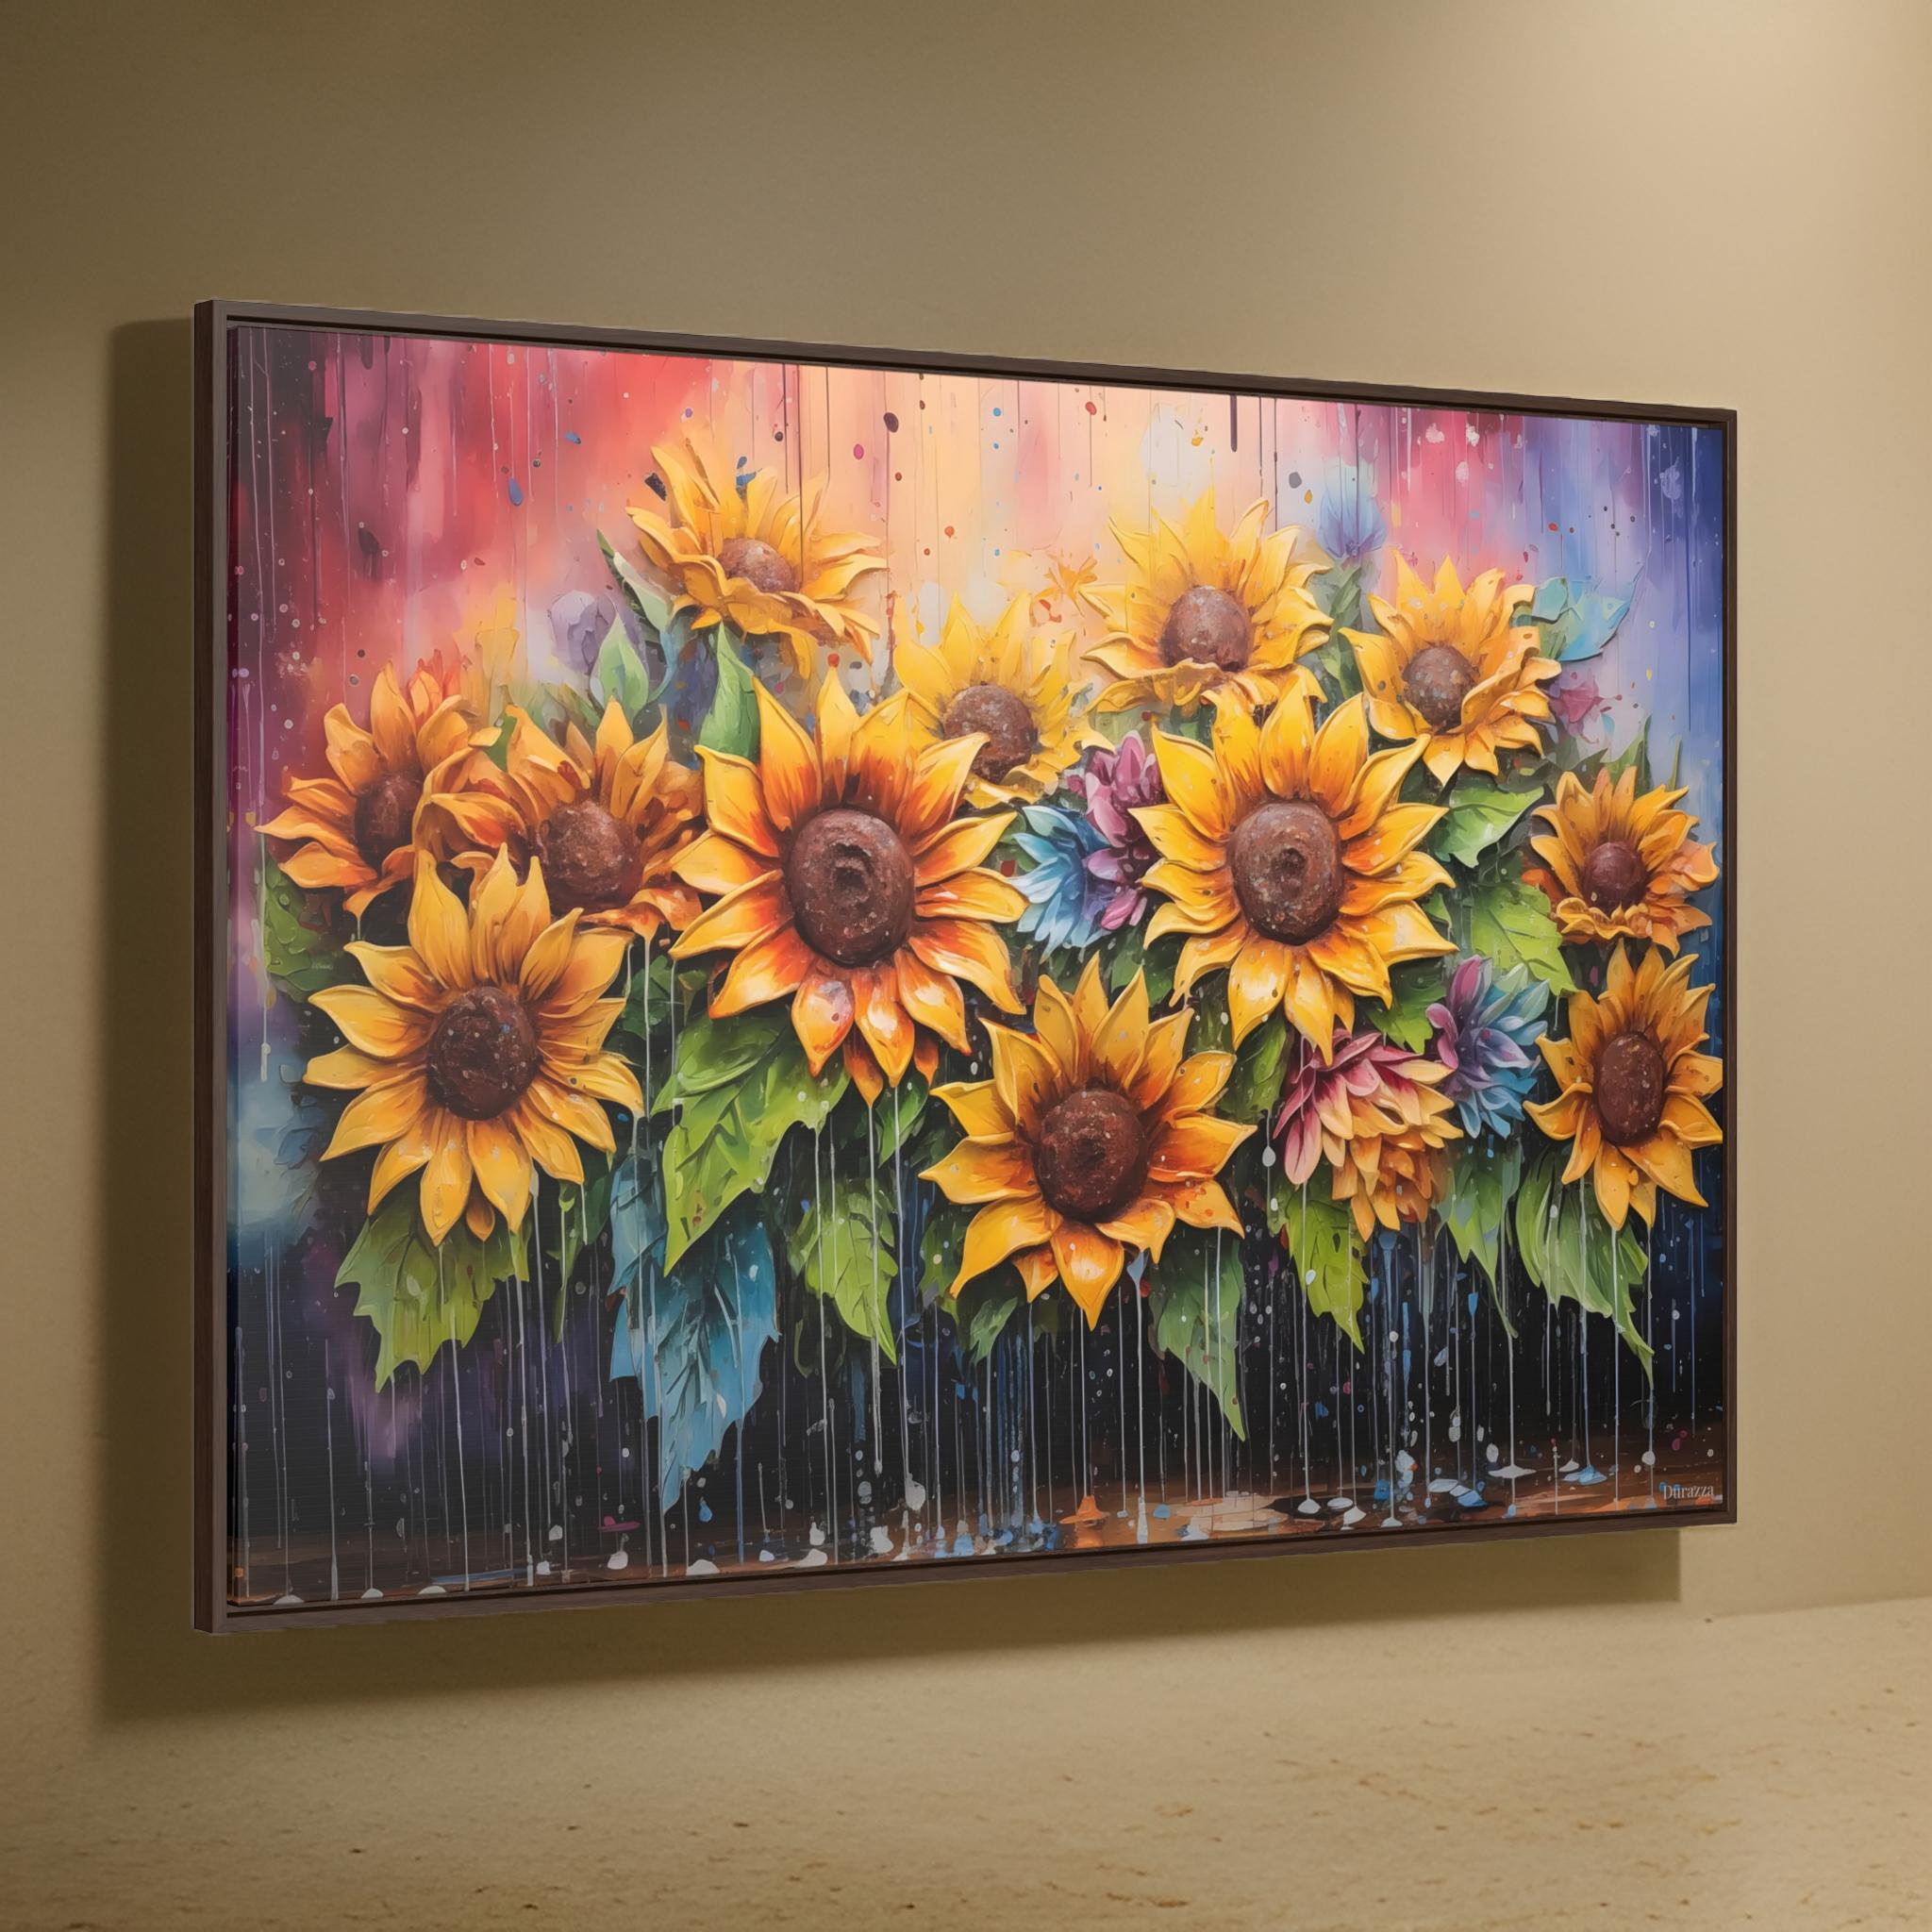 Raindrop Sunflowers Wall Decor: Whimsical Art